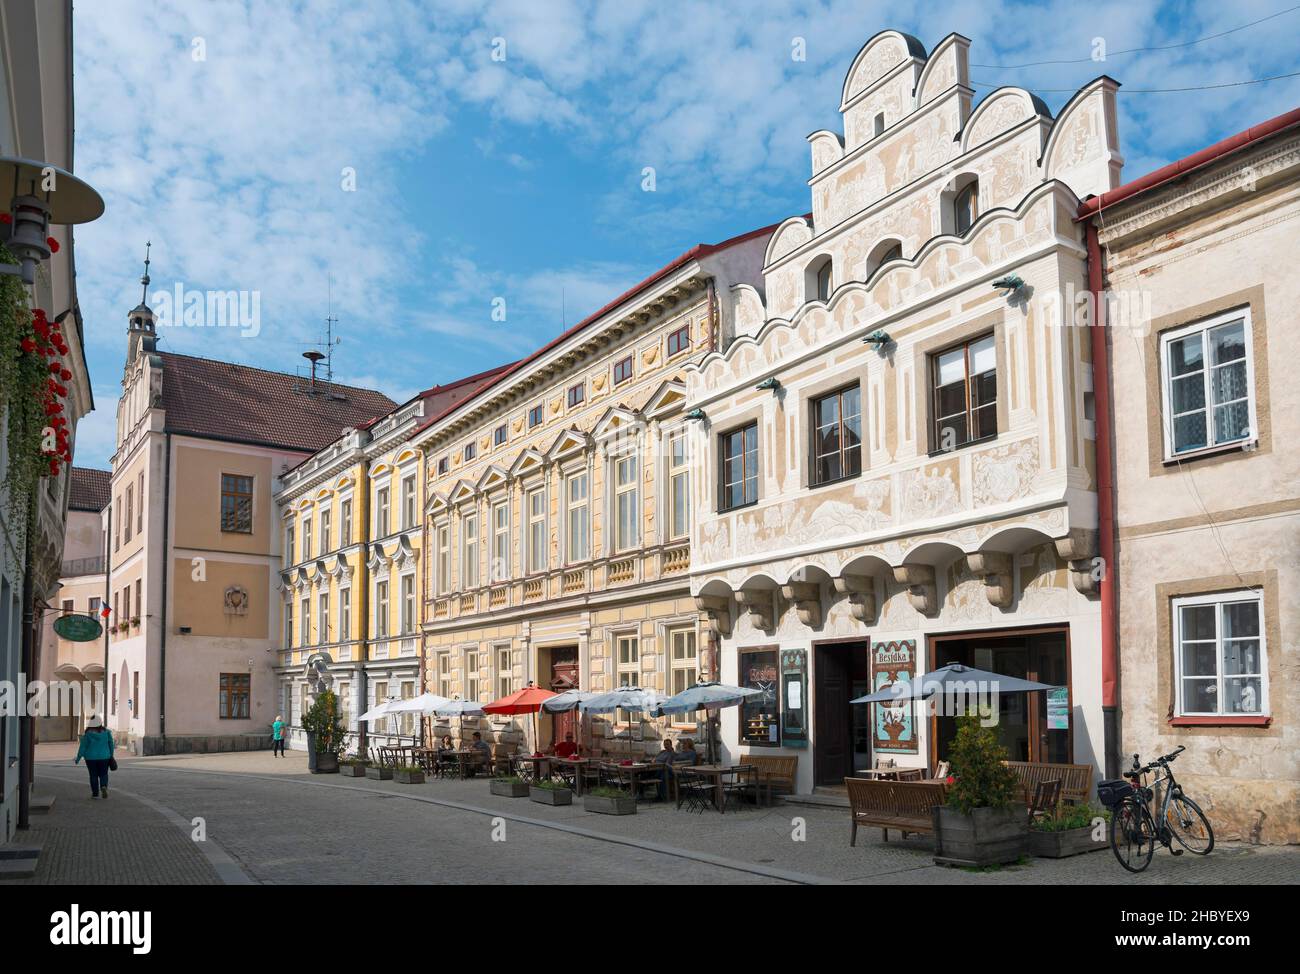 Häuser in Horni nam, historische Altstadt, Slavonice, Zlabings, Böhmisch-Mährische Hochland, Ceska Kanada, Tschechische Republik Stockfoto